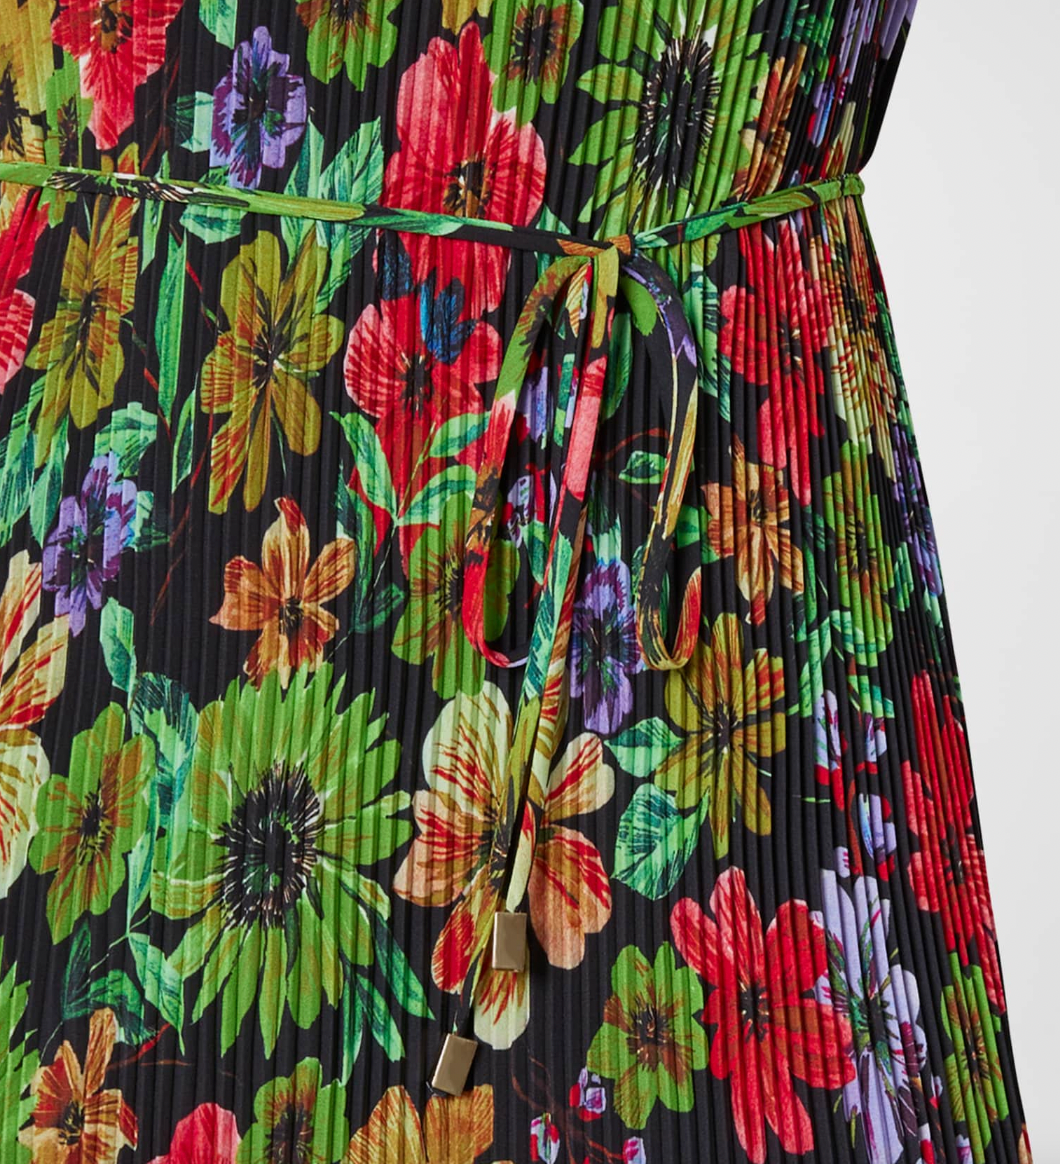 MILLY Melina Pleated Floral-Print Midi Dress